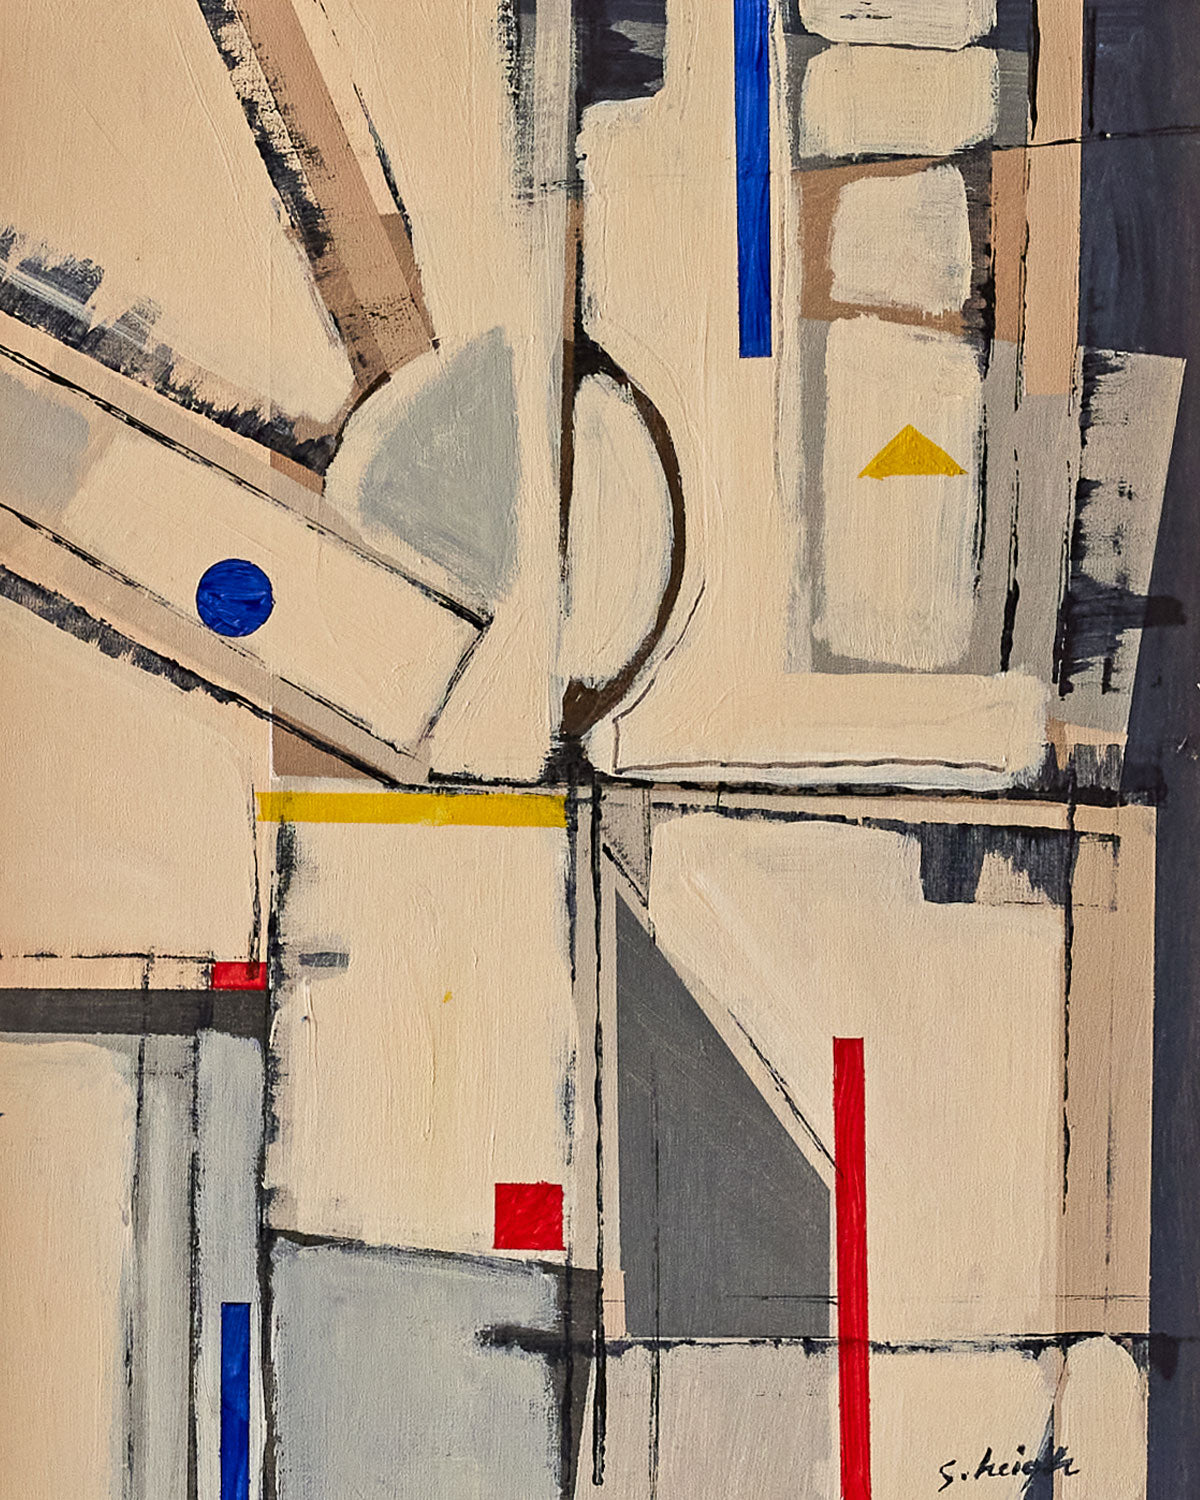 "Bauhaus" by Stephen Heigh